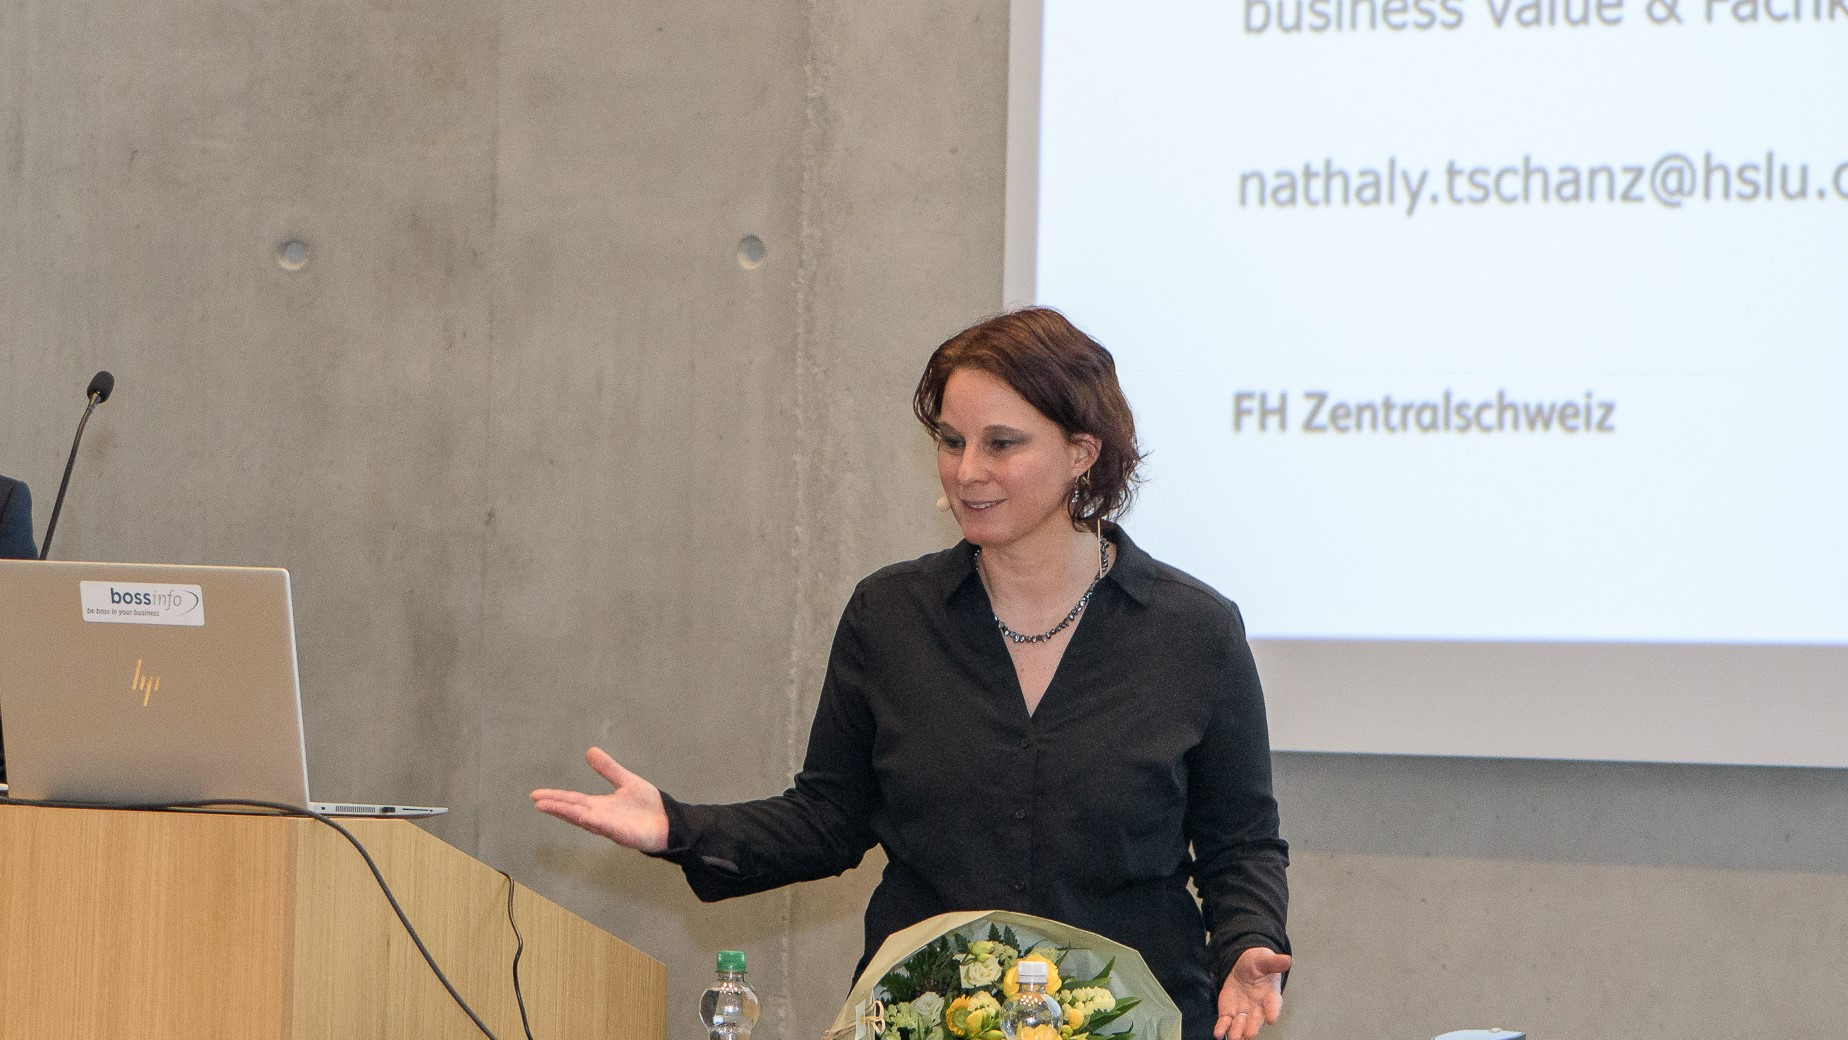 Nathaly Tschanz during a talk